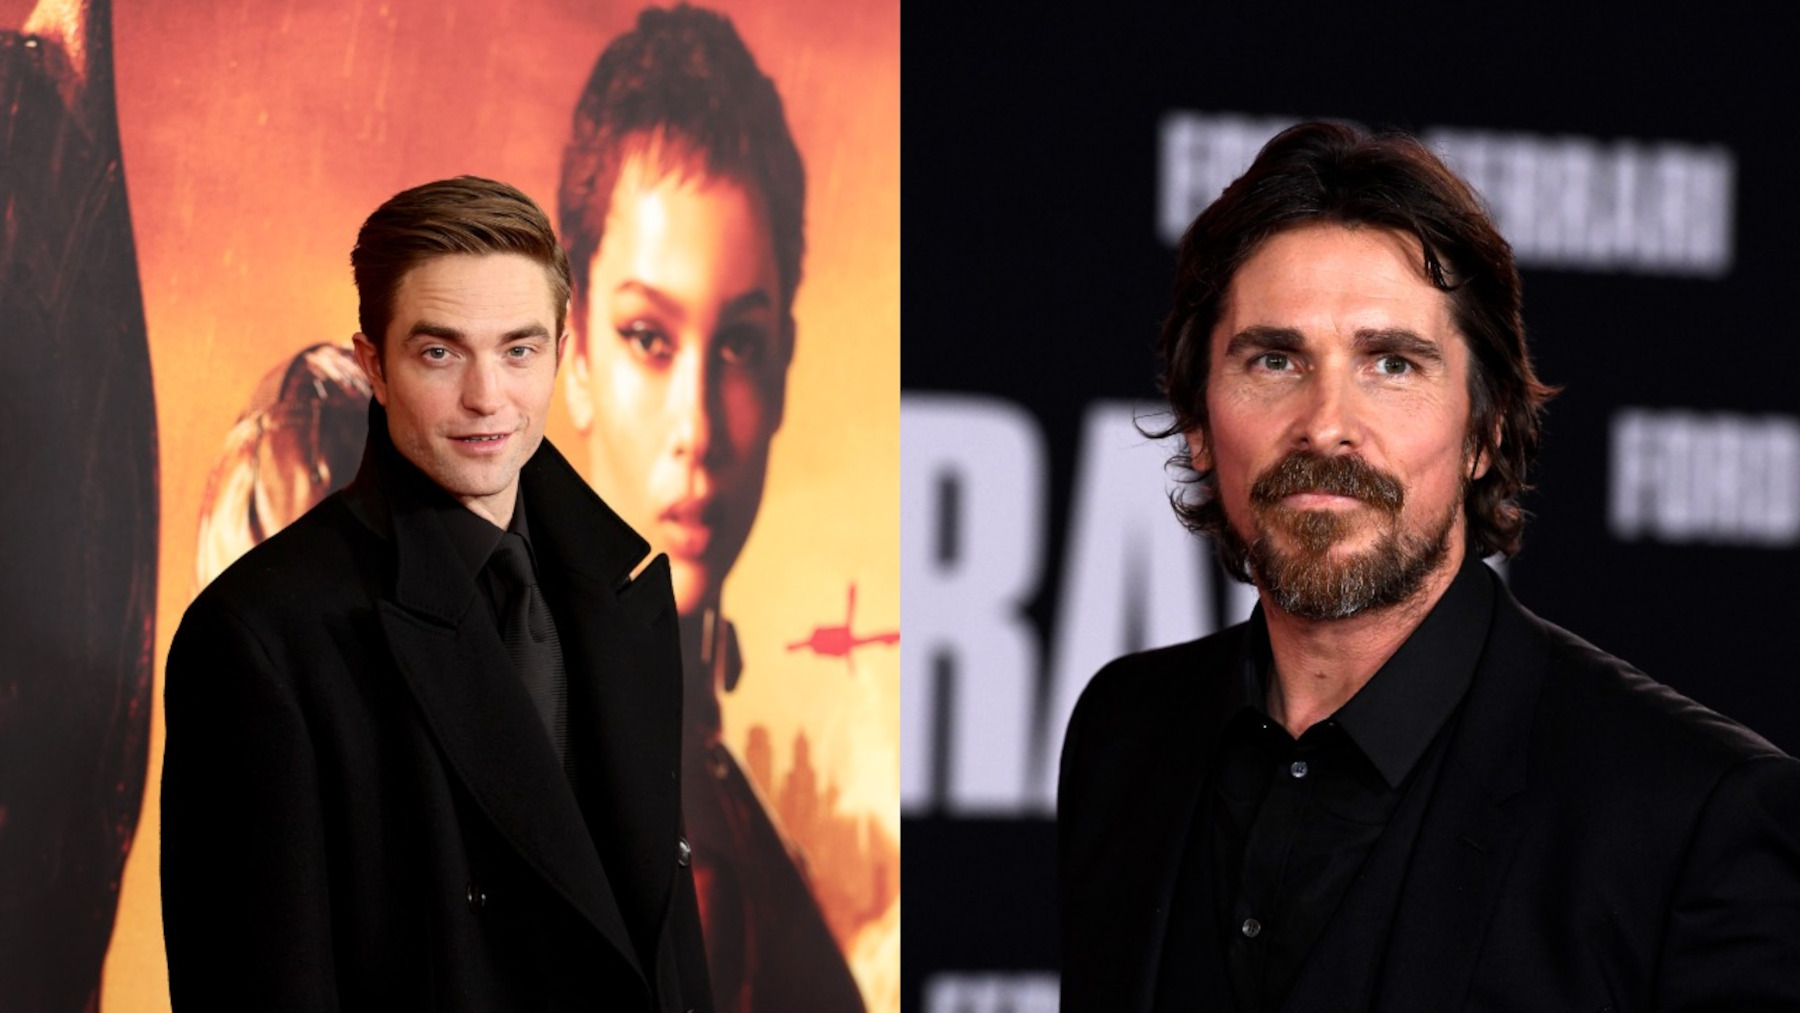 Which Batman Actor Has a Higher Net Worth, Robert Pattinson or Christian Bale?